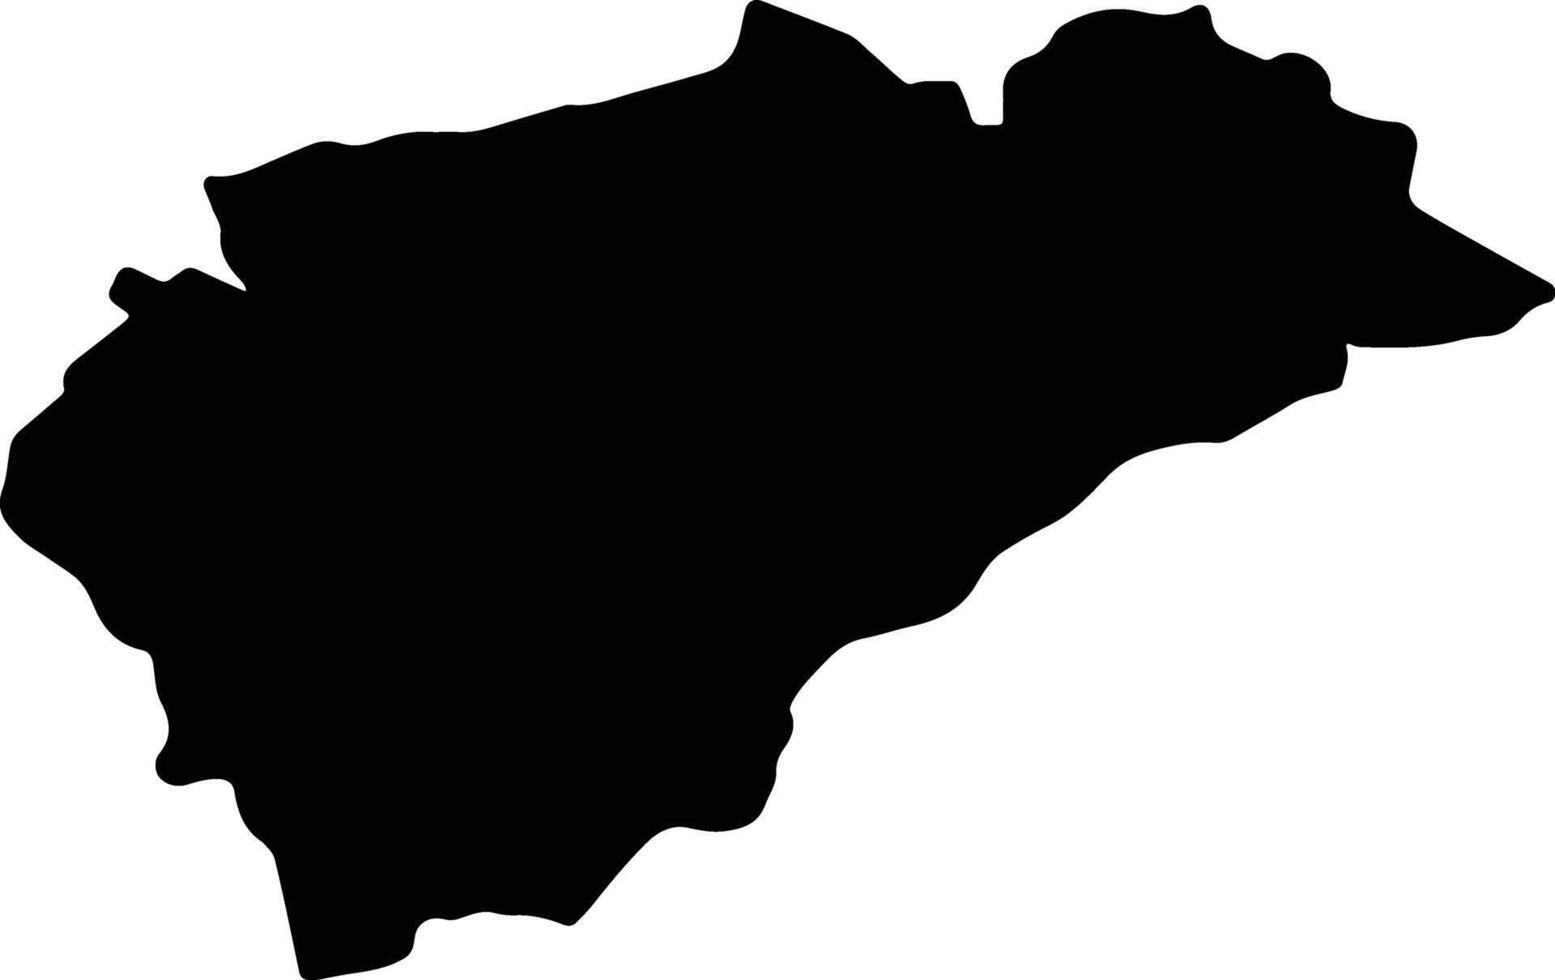 Segovia Spain silhouette map vector